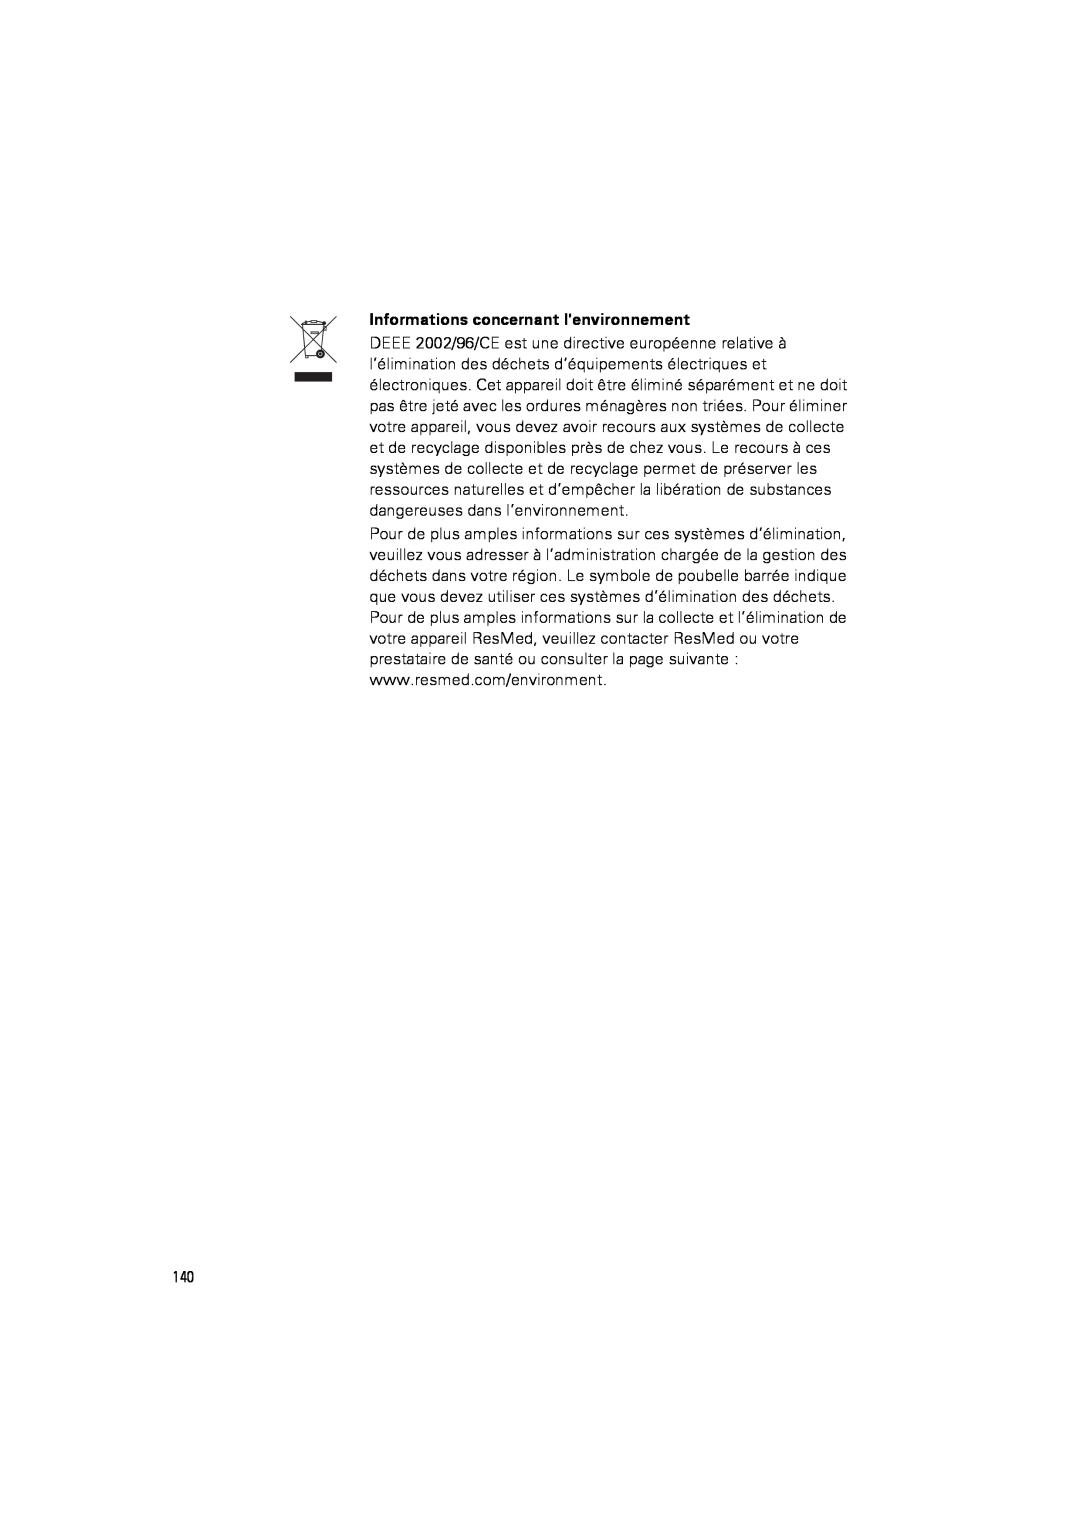 ResMed III & III ST user manual Informations concernant lenvironnement 